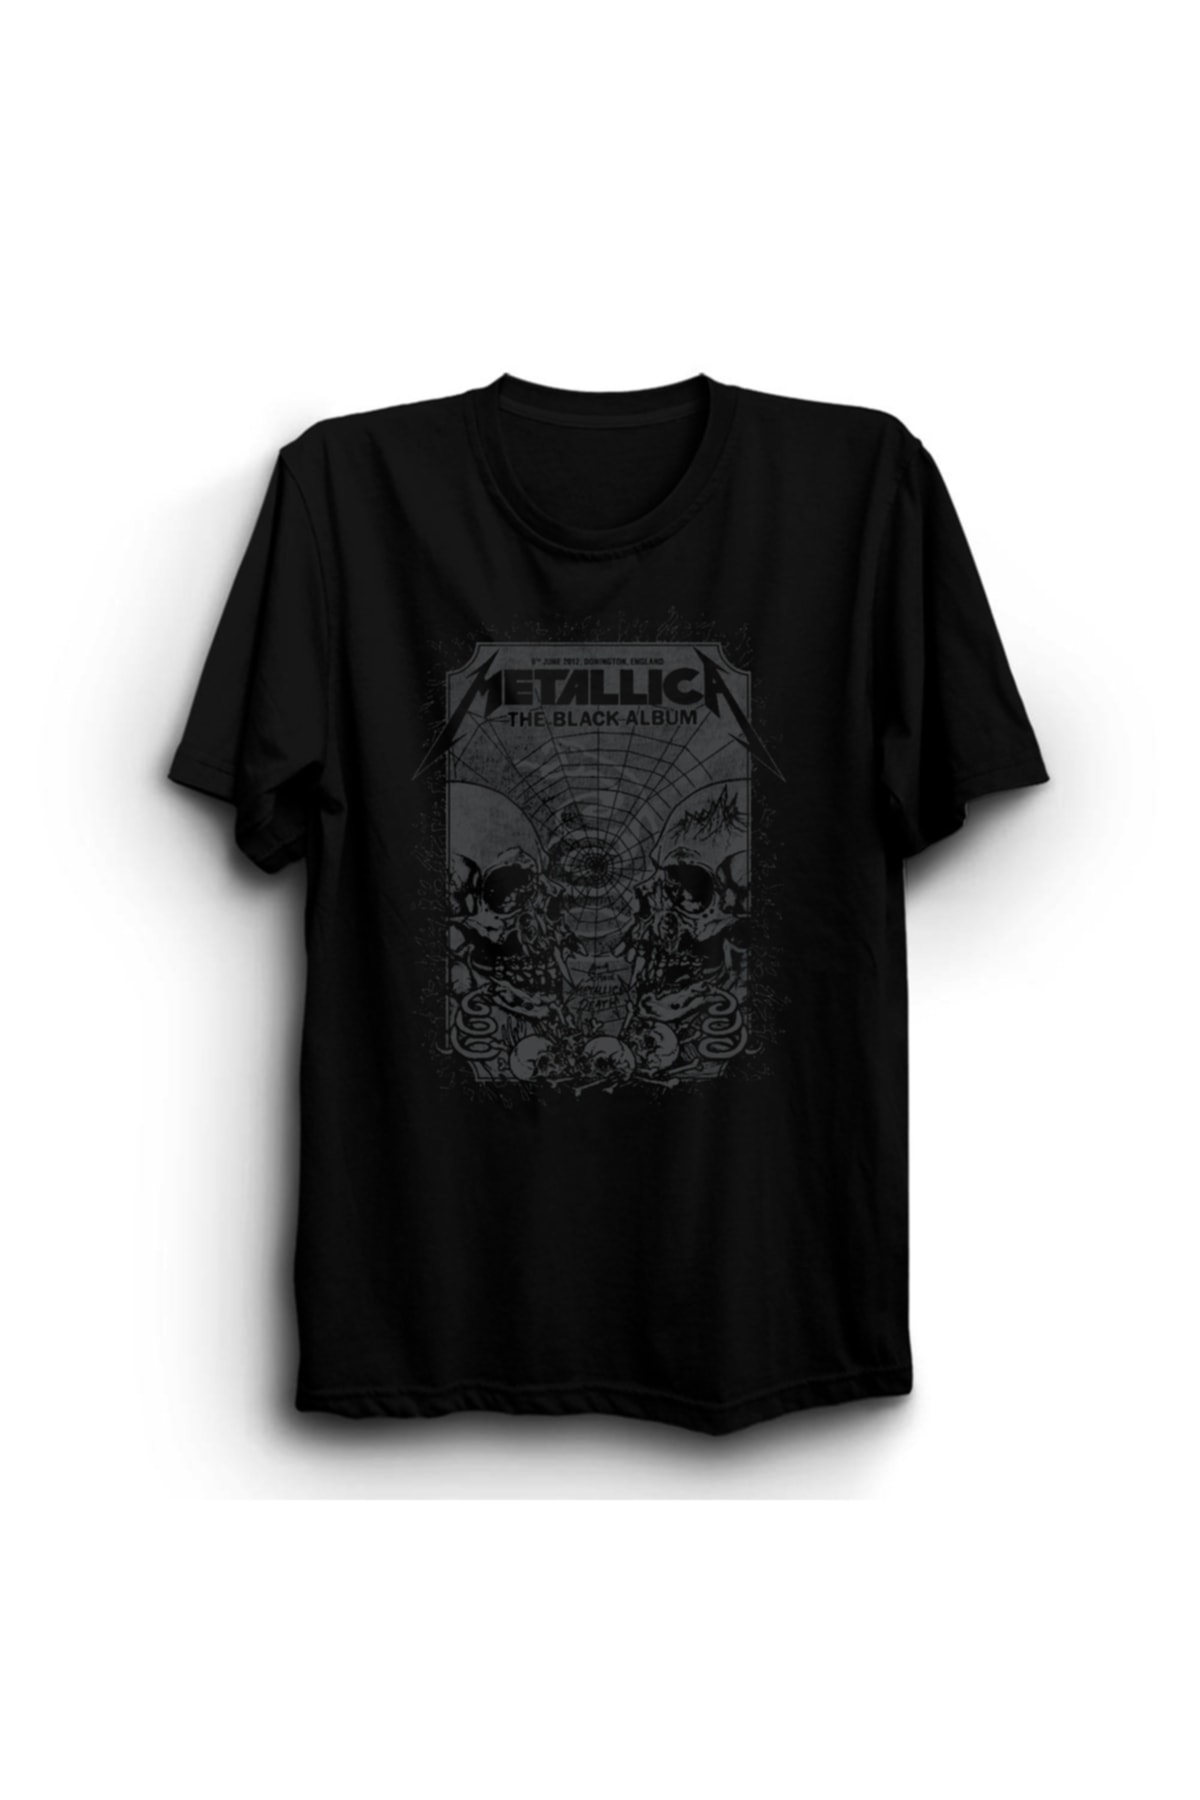 The Fame Metallica, Black Album, Rock, Metal Tişört